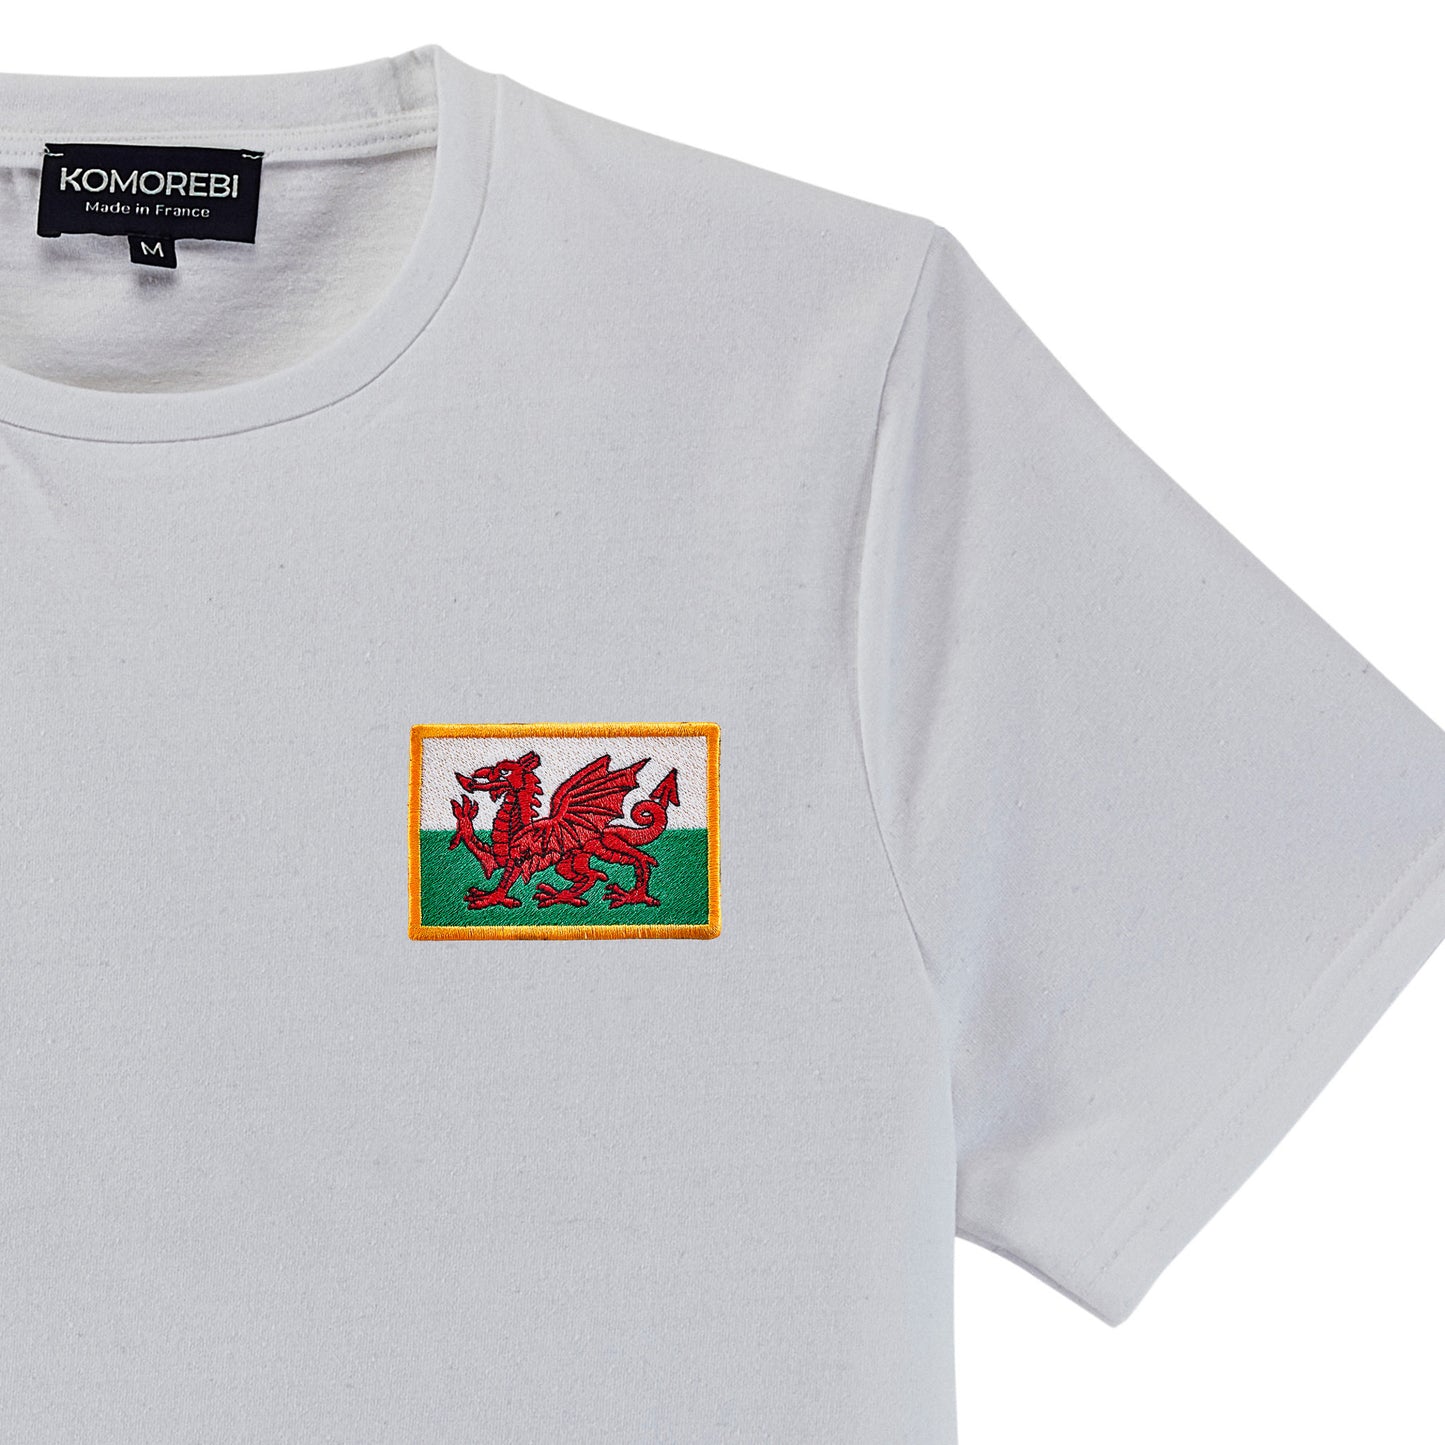 Wales • T-shirt